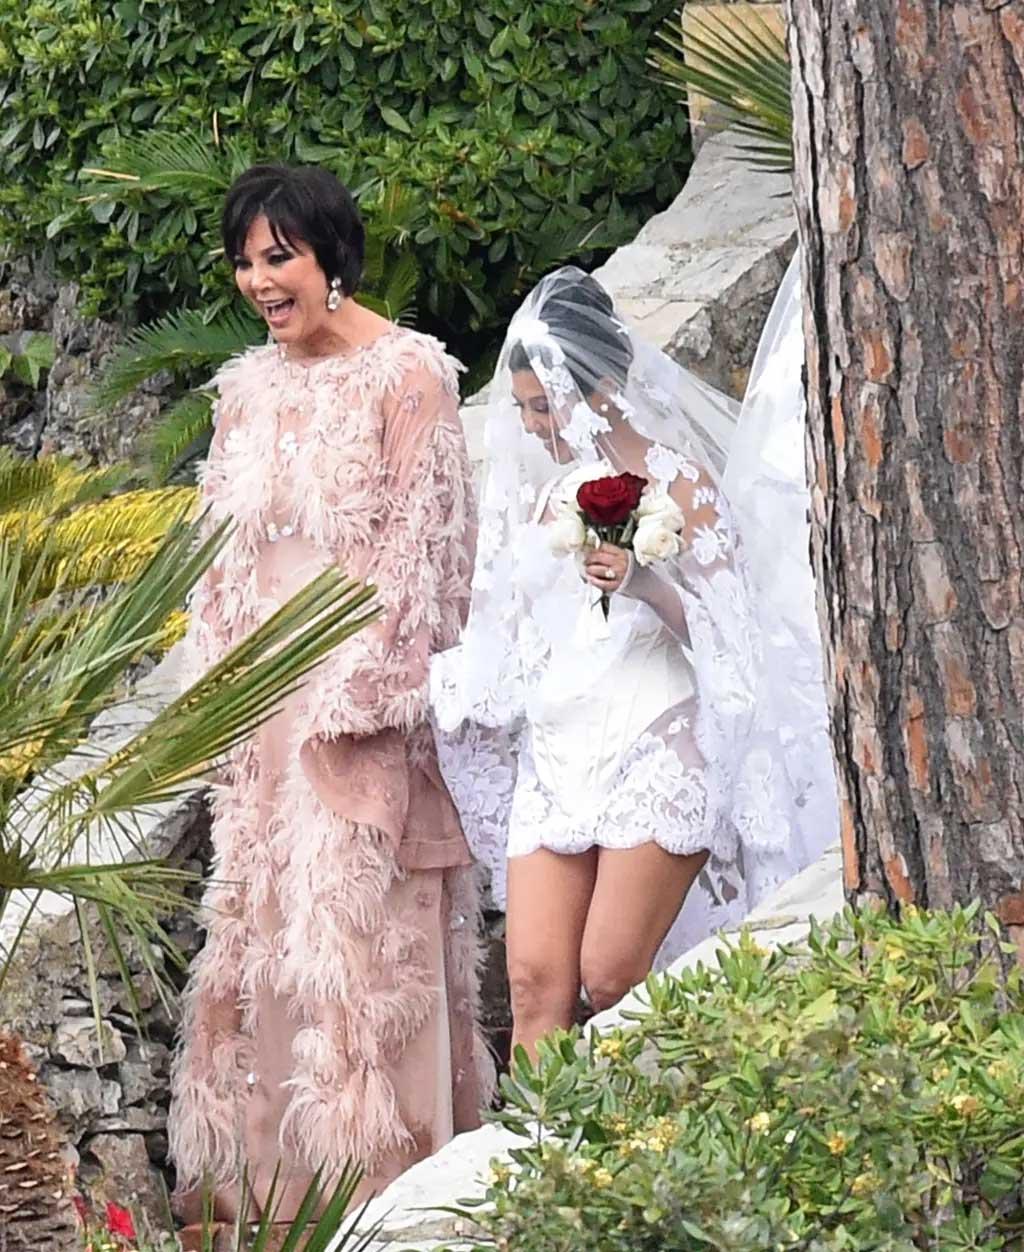 Kourtney Kardashian and Travis Barkers Italian wedding: Alabama Barker shares photos